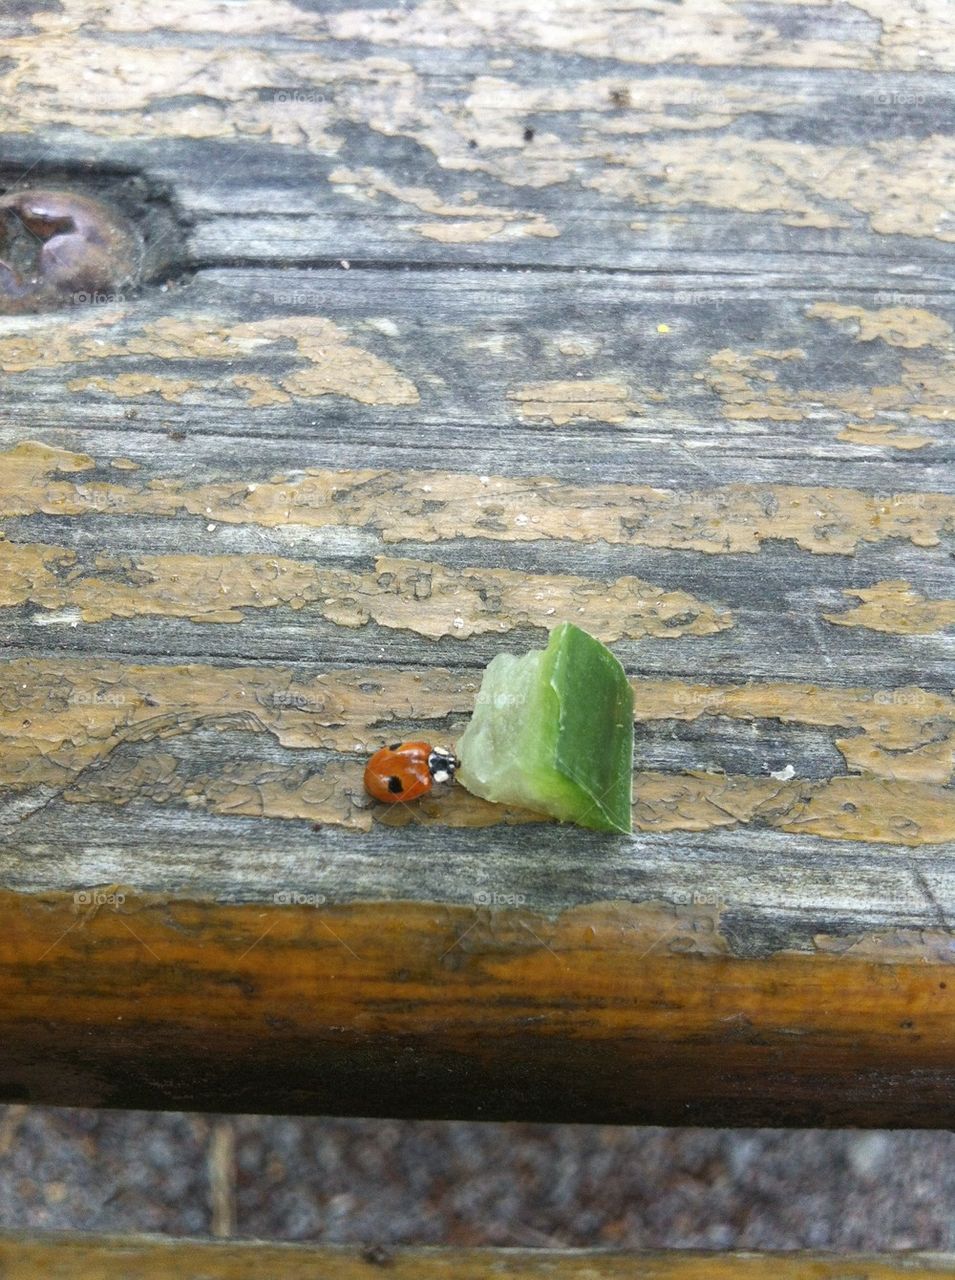 Dinner for a ladybug